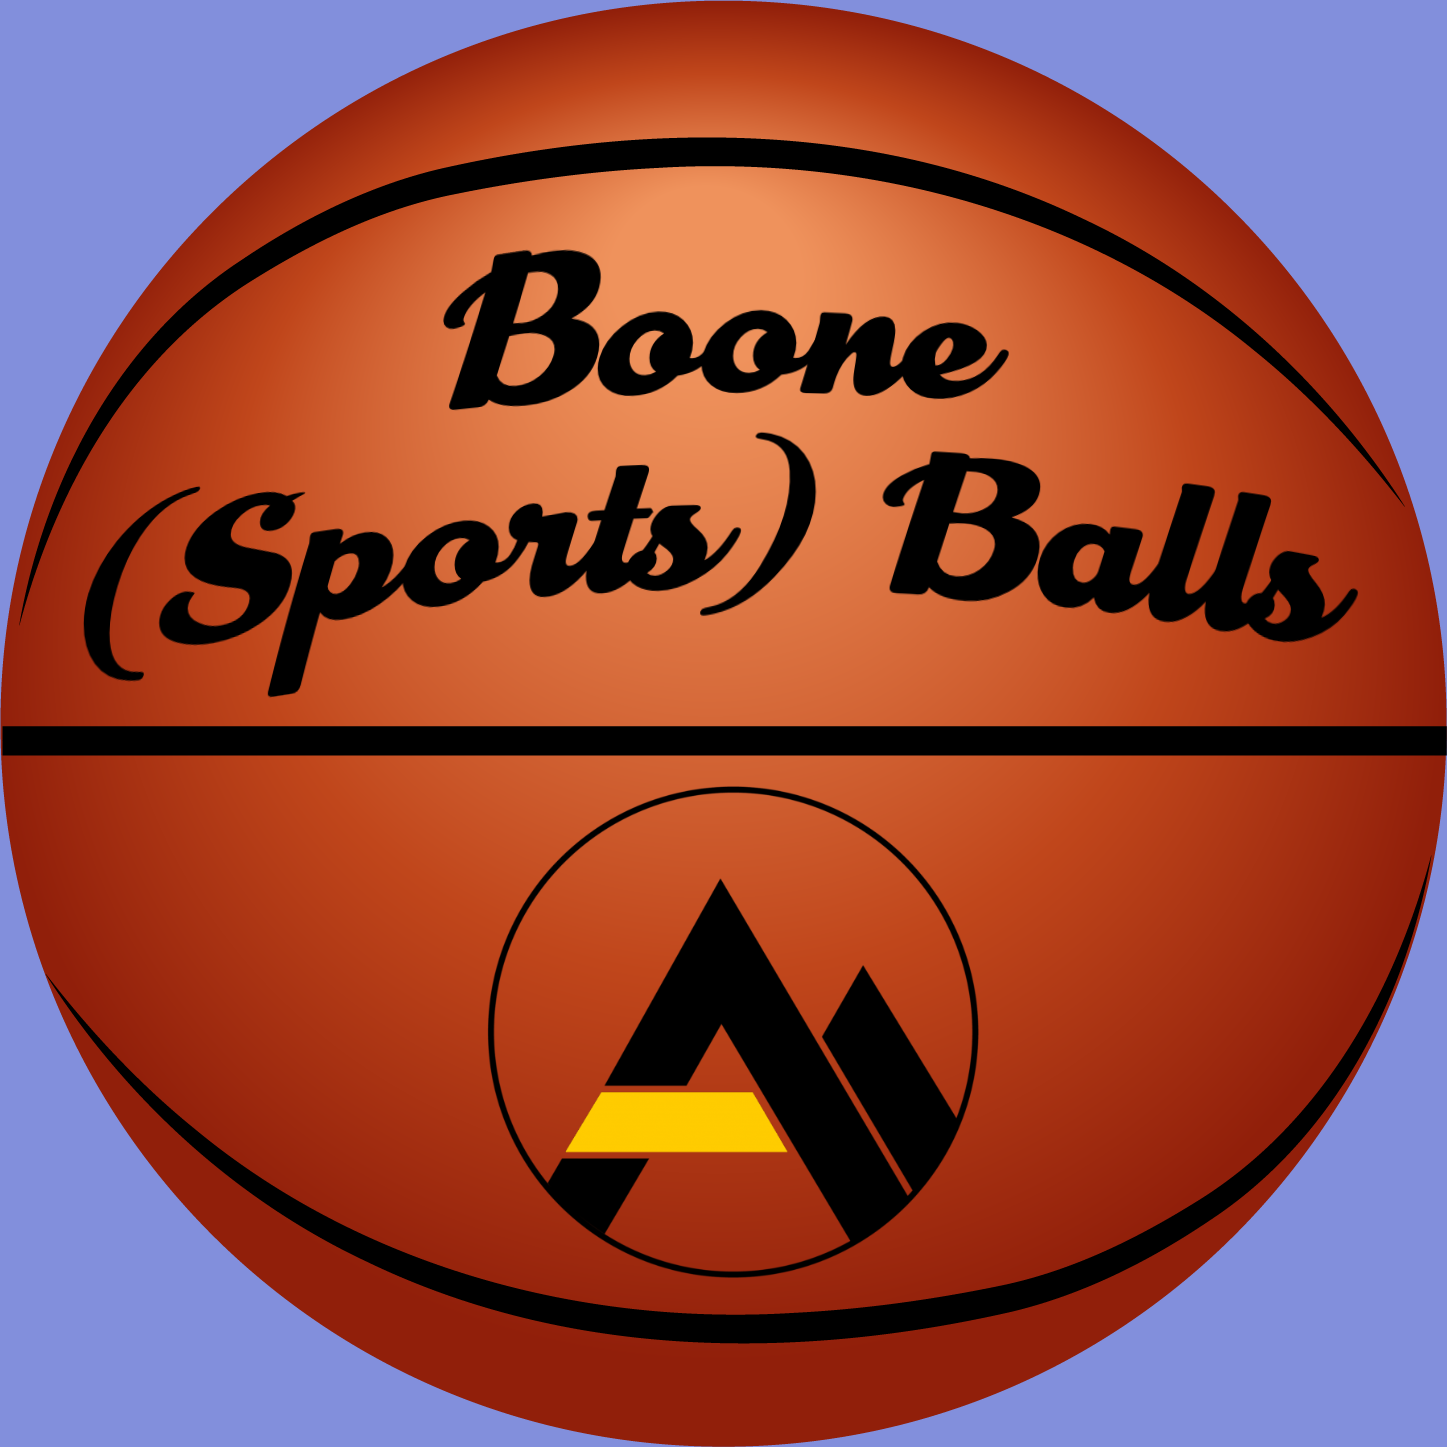 Boone (Sports)Balls Episode 1